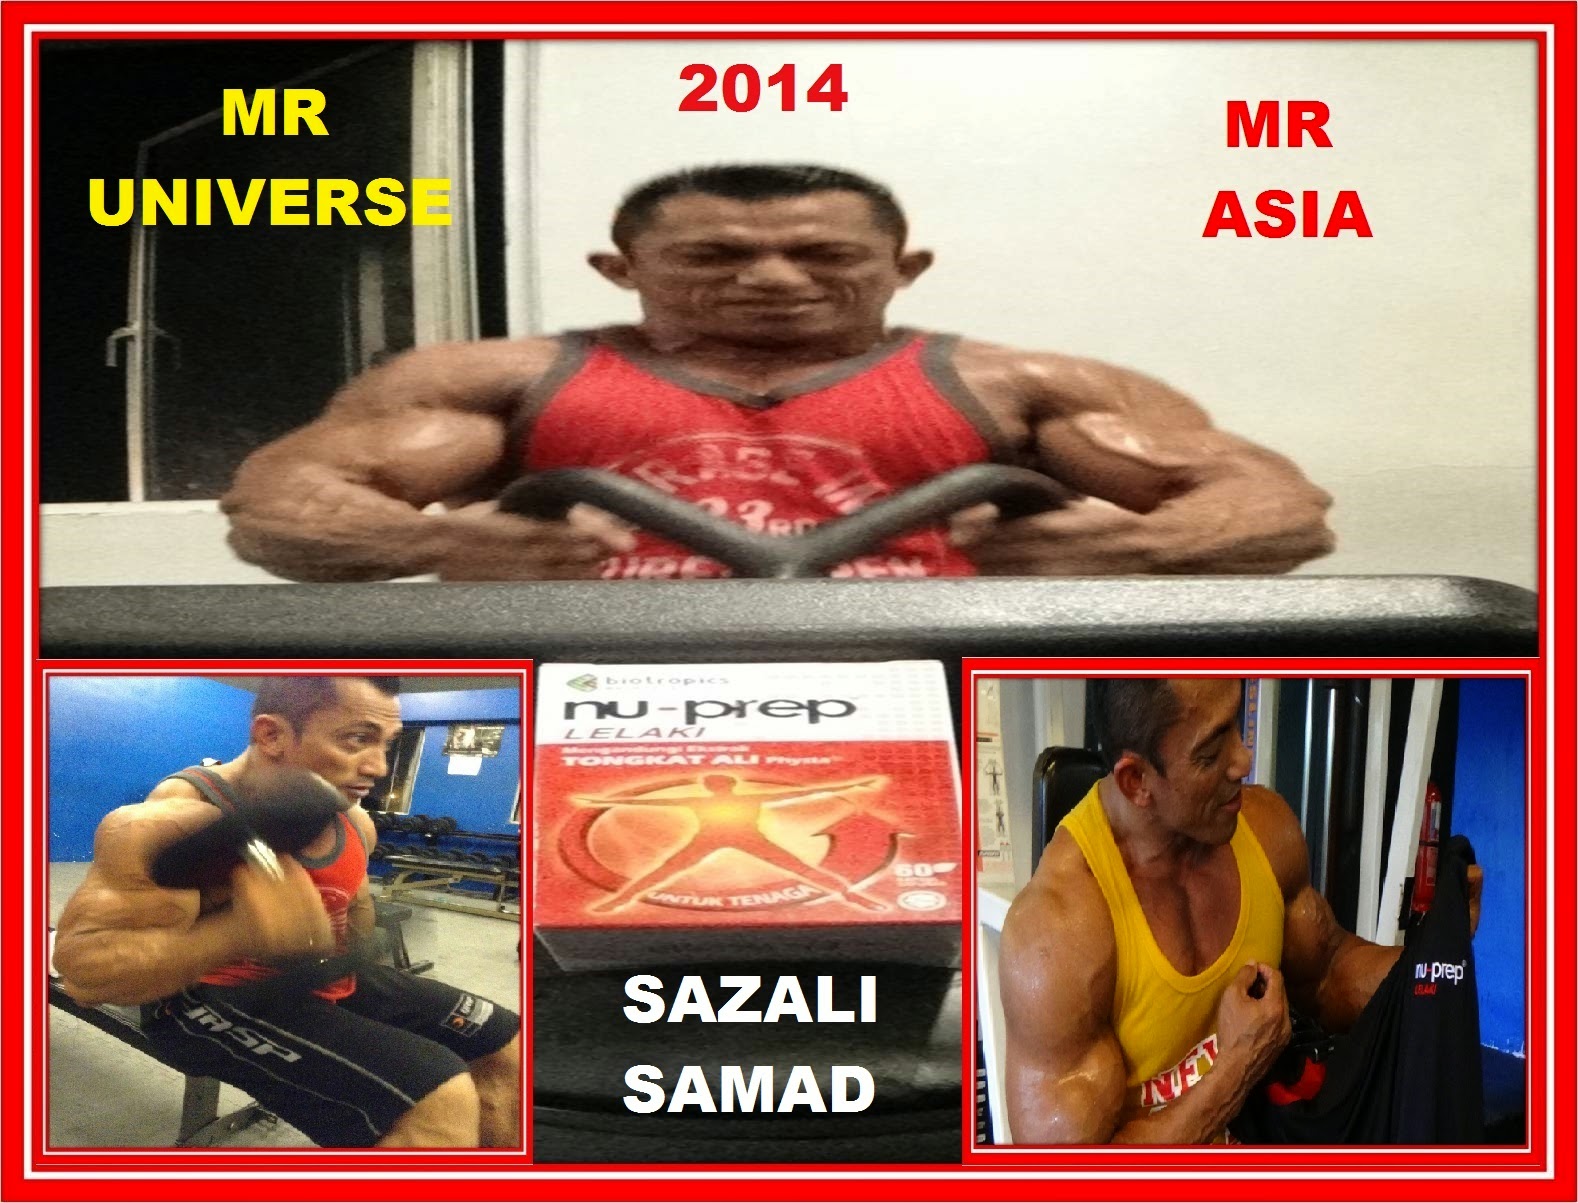 MR ASIA, MR UNIVERSE -SAZALI SAMAD 2014